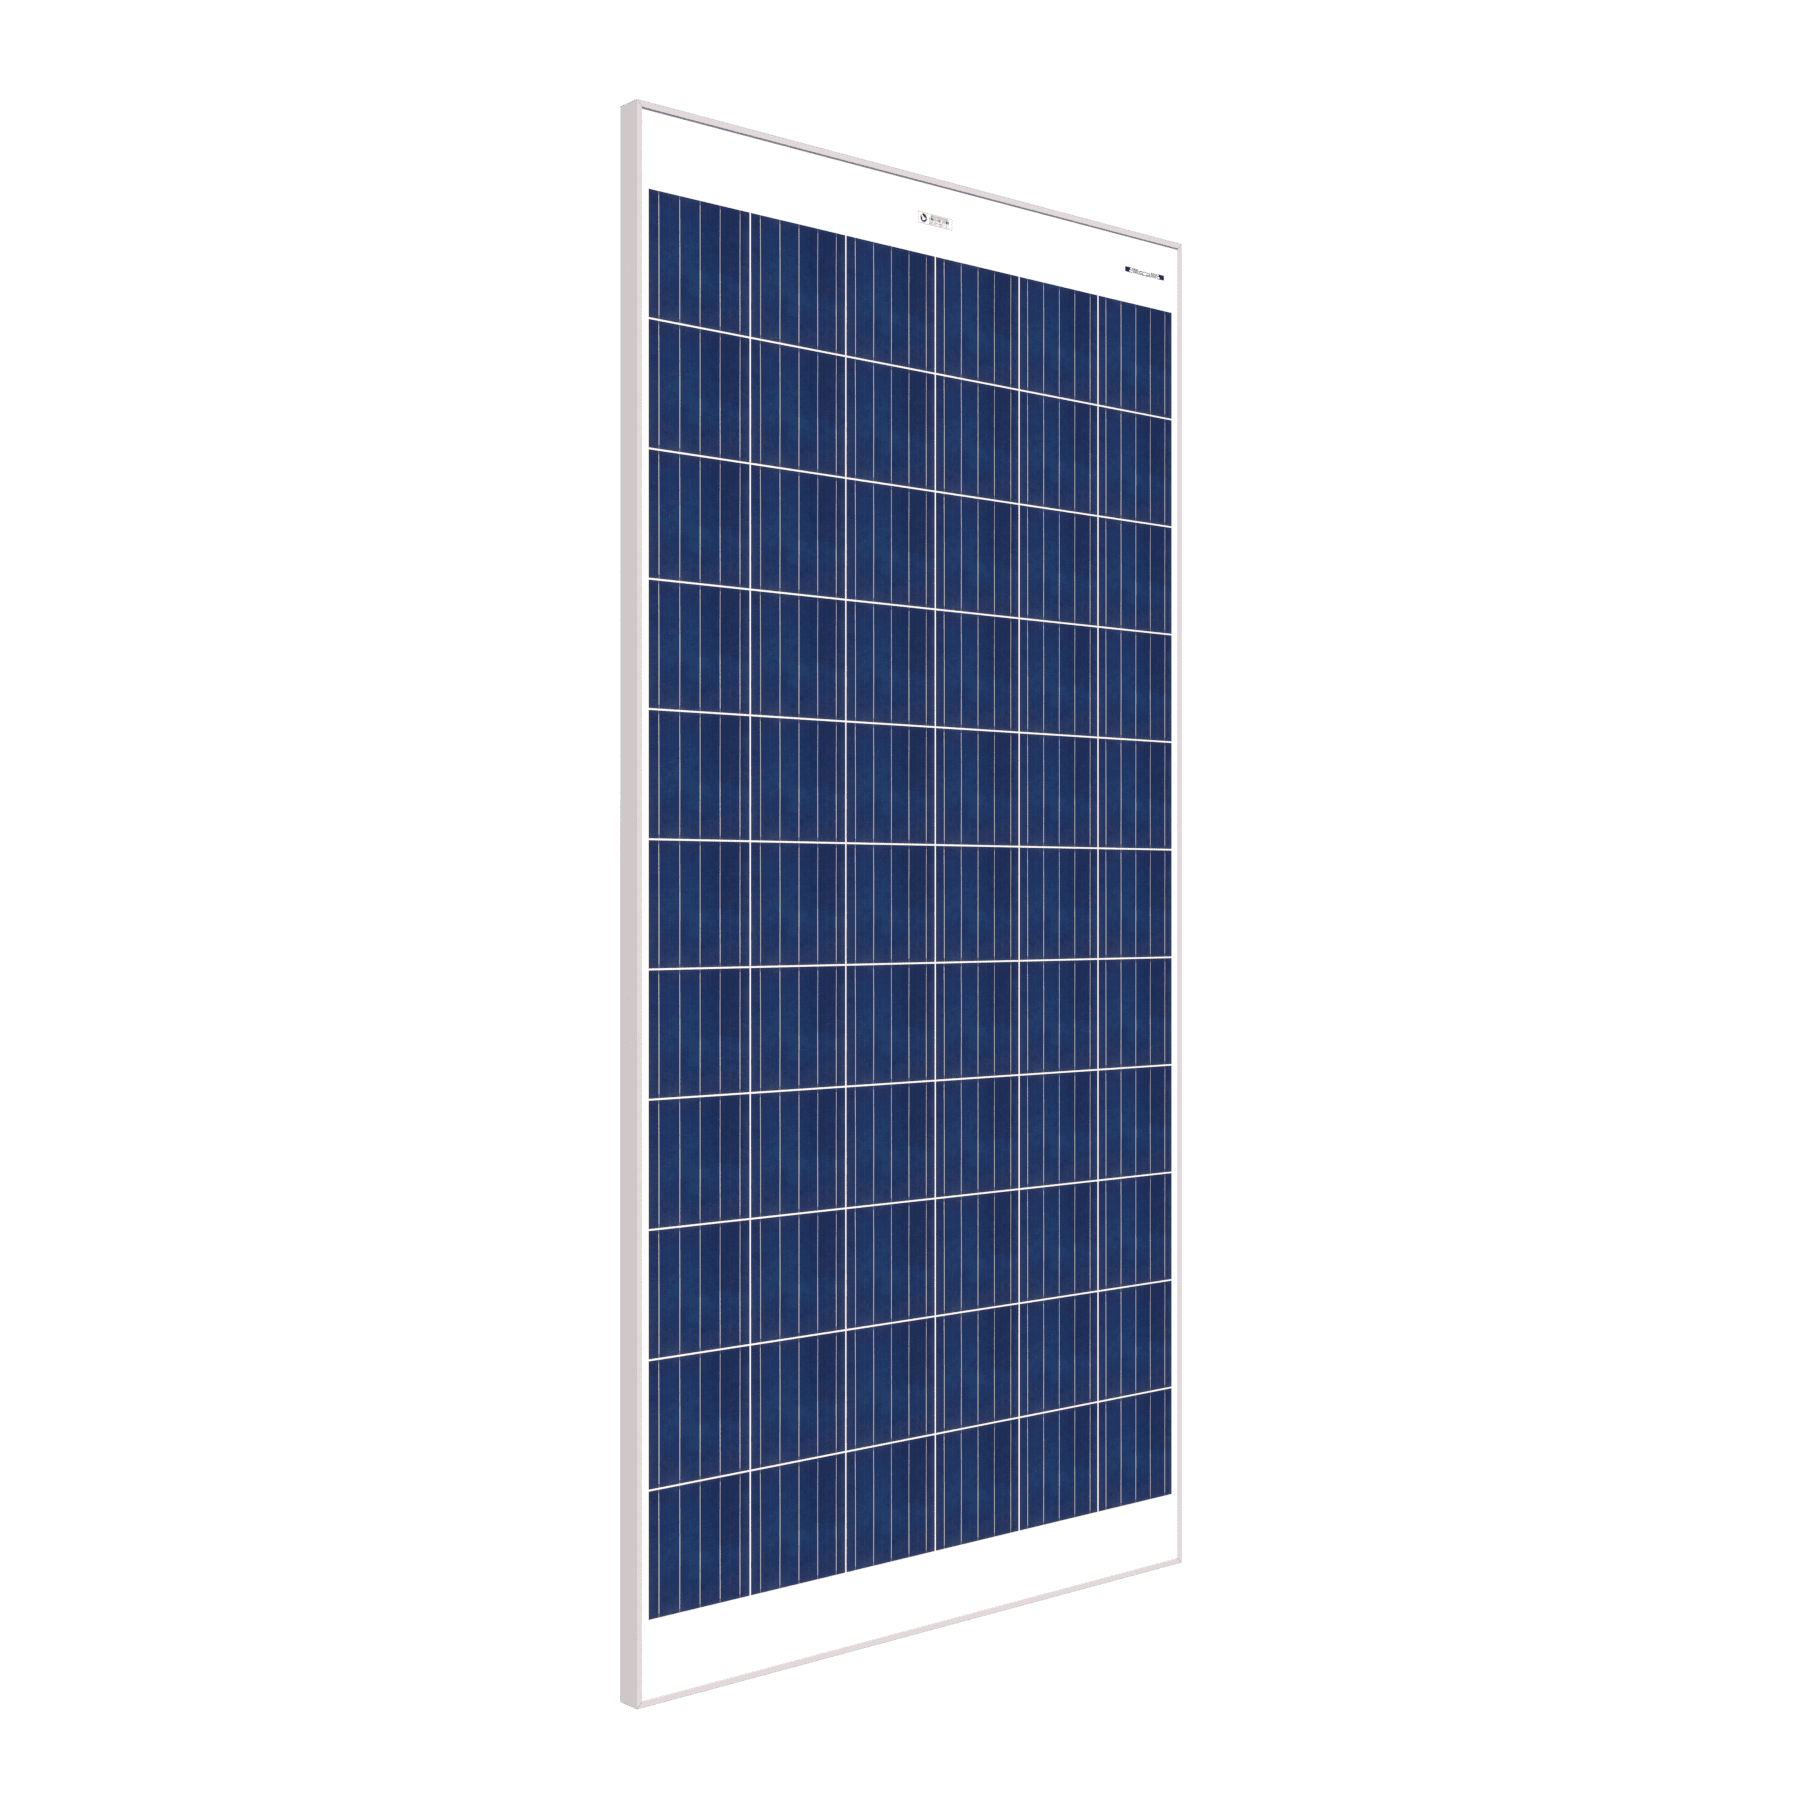 Shop Bluebird 300 Watt Solar Panel Online in India at Best Price - Delhi Electronics